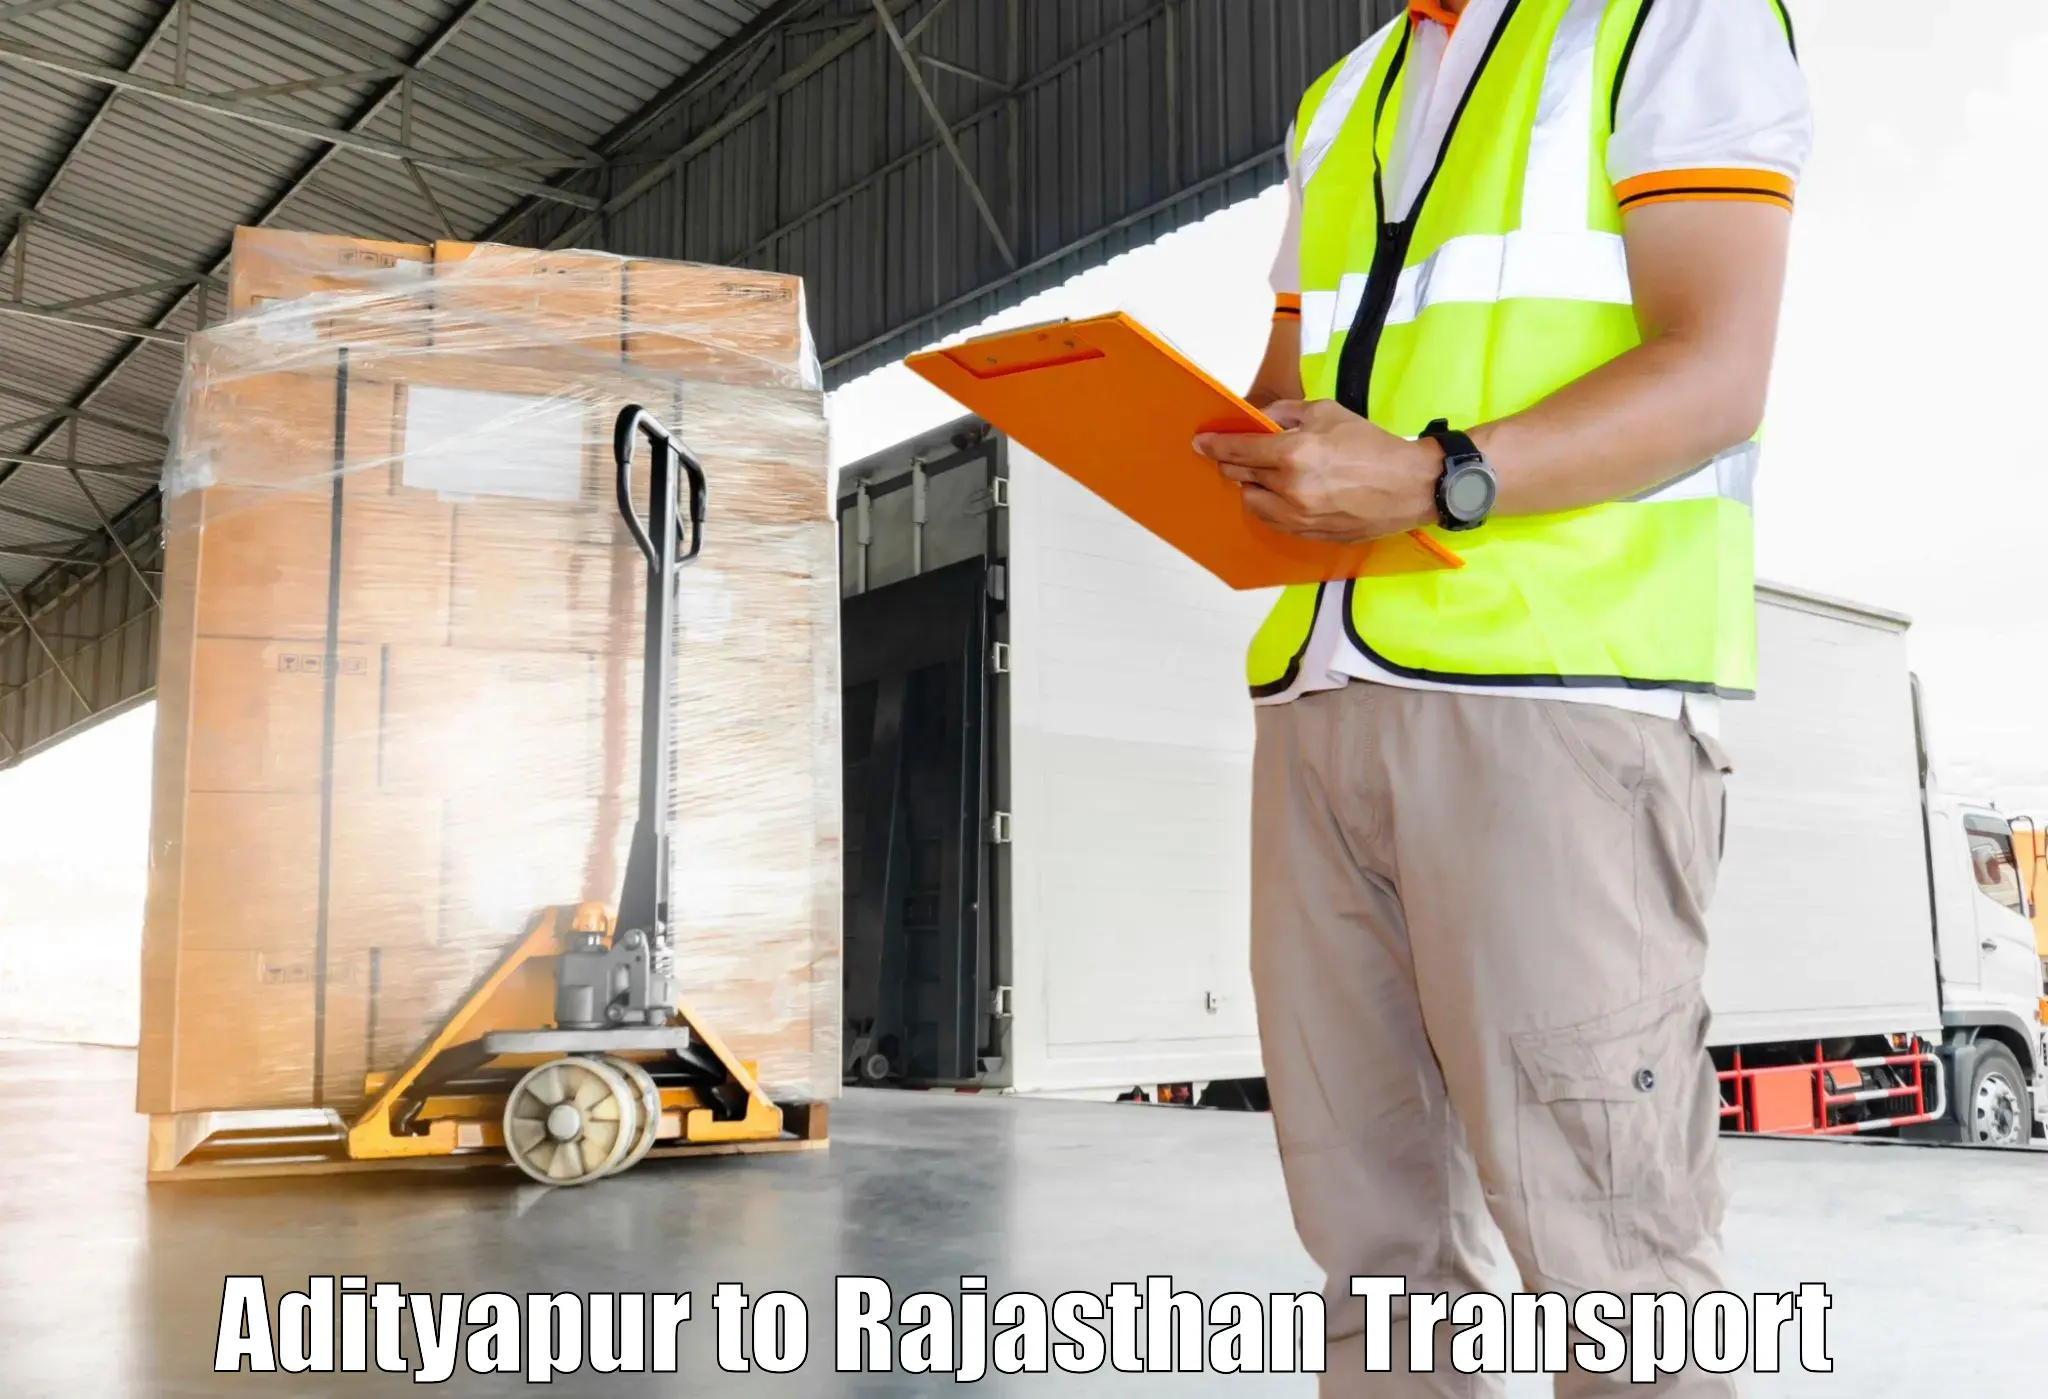 Parcel transport services in Adityapur to Neemrana